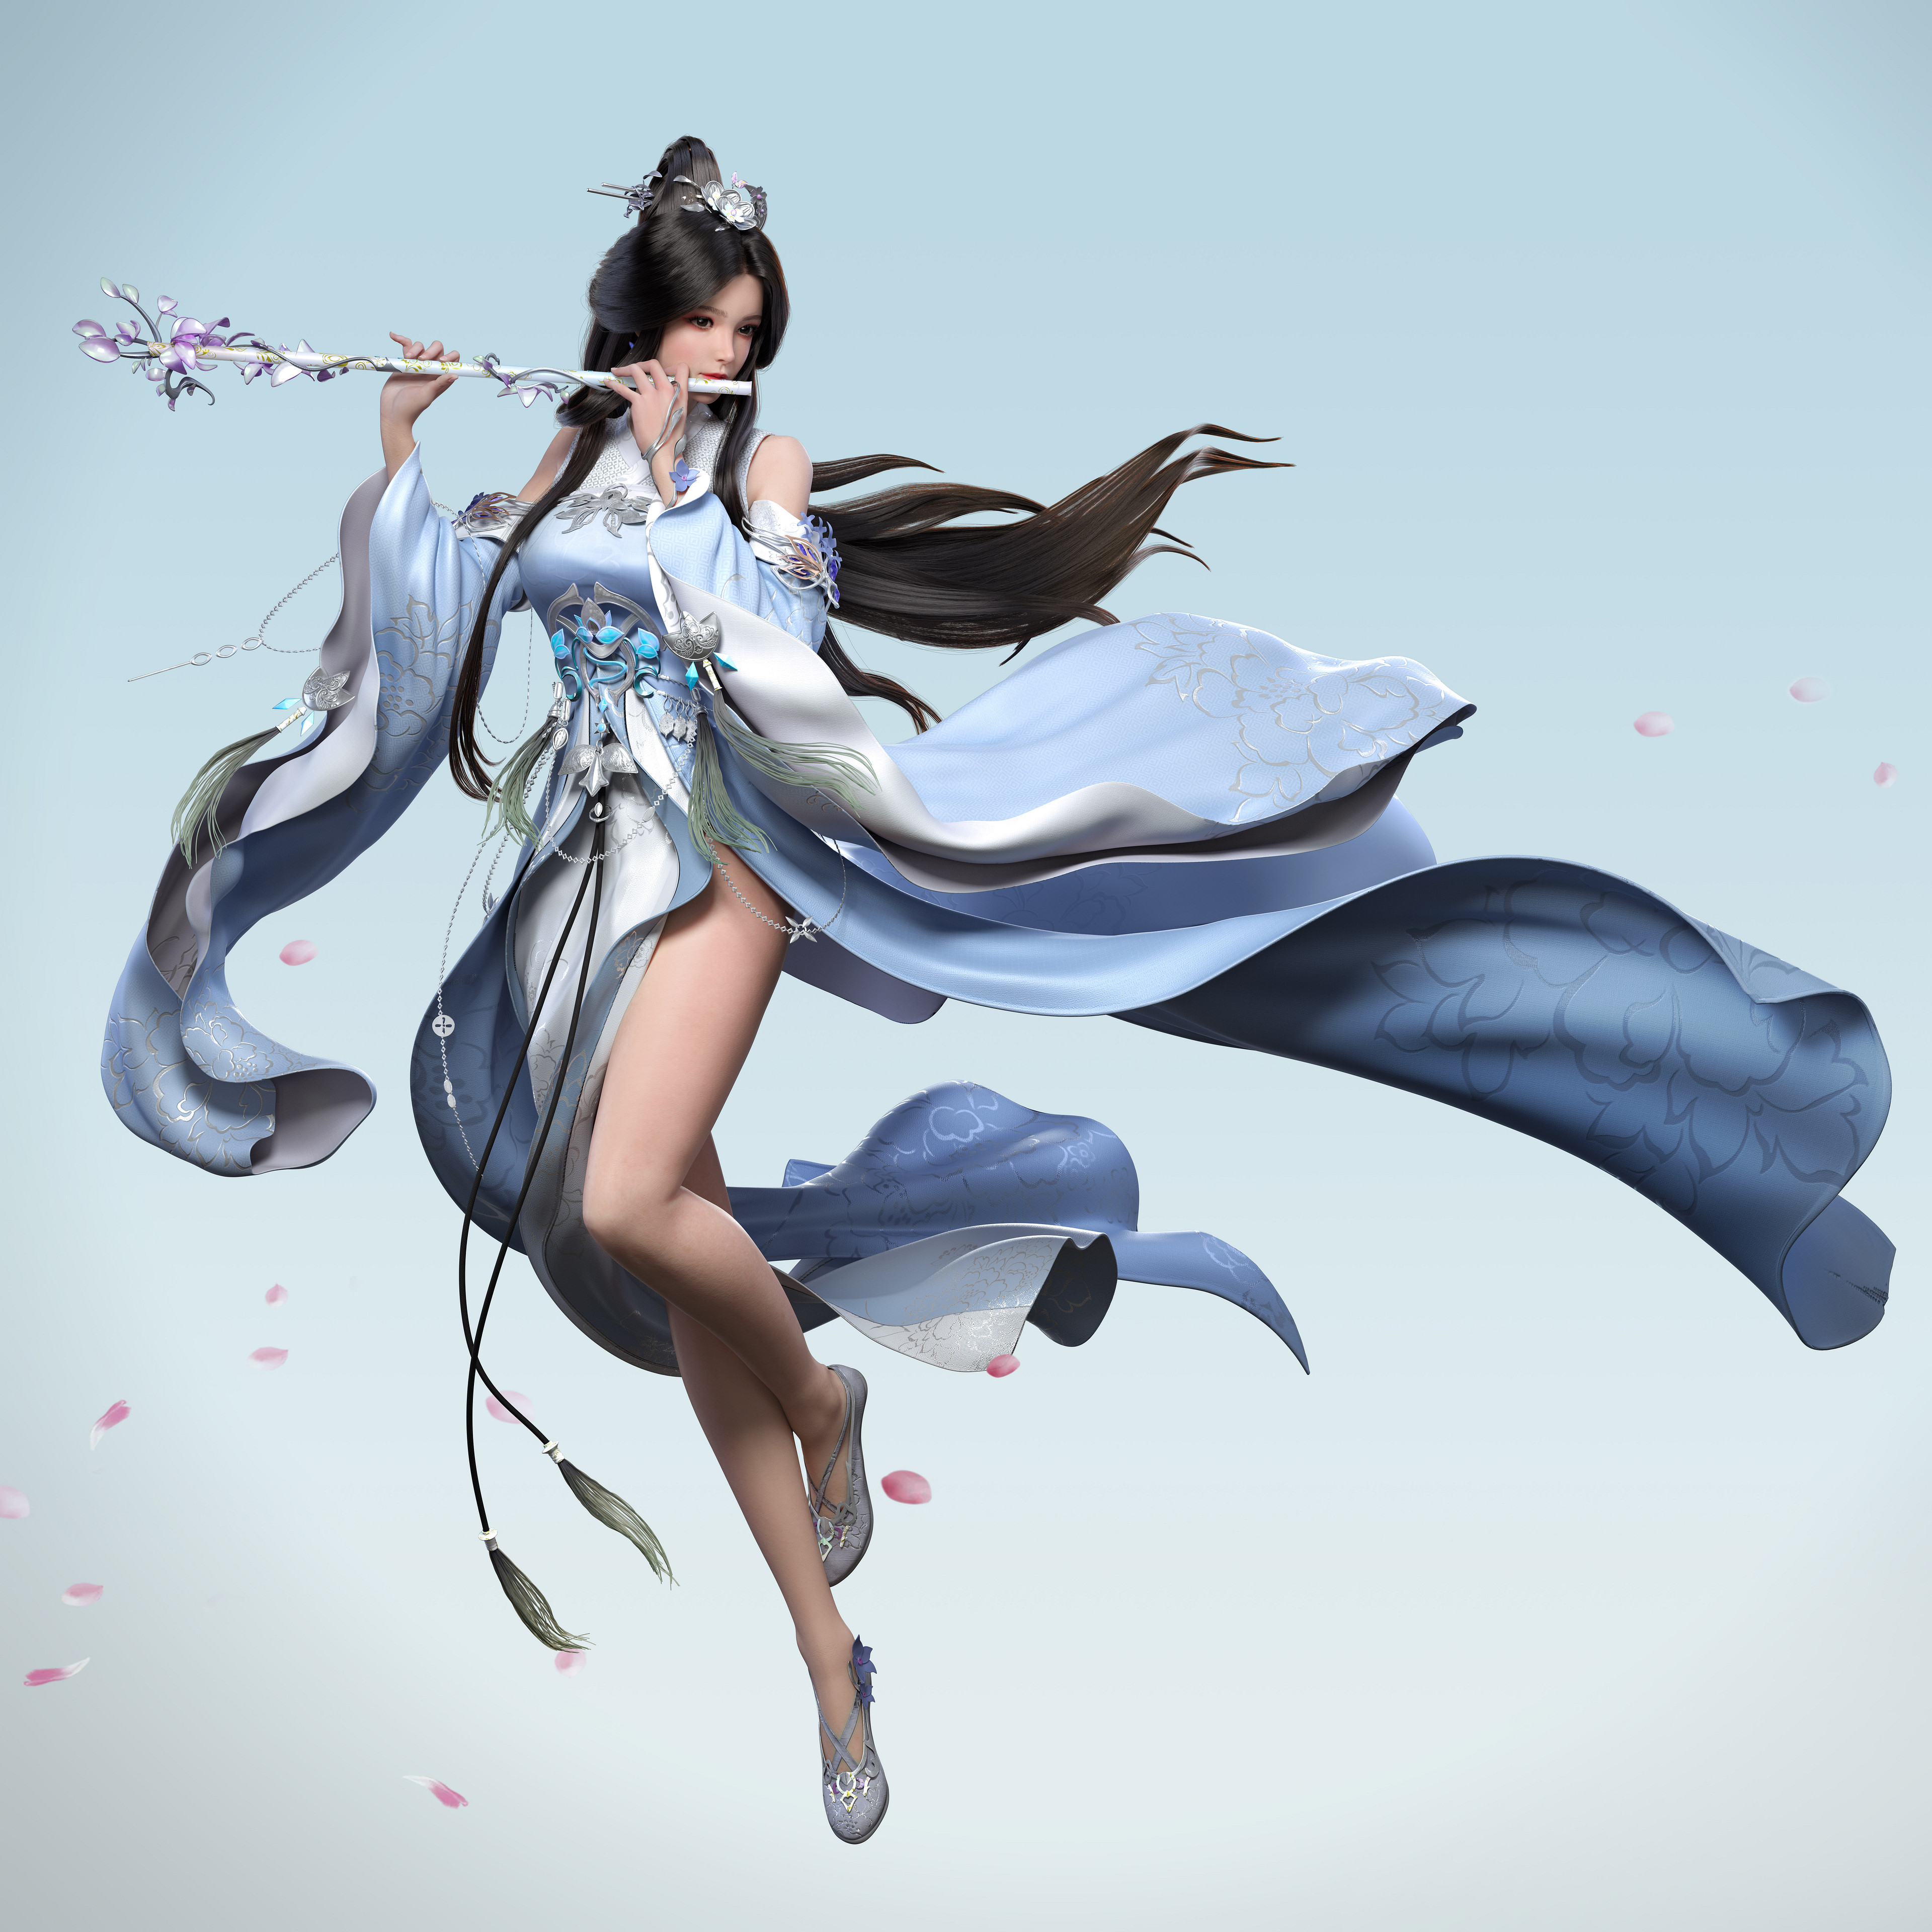 Cifangyi CGi Women Asian Dark Hair Long Hair Wind Dress Blue Clothing Flute Singing Cherry Blossom S 3840x3840